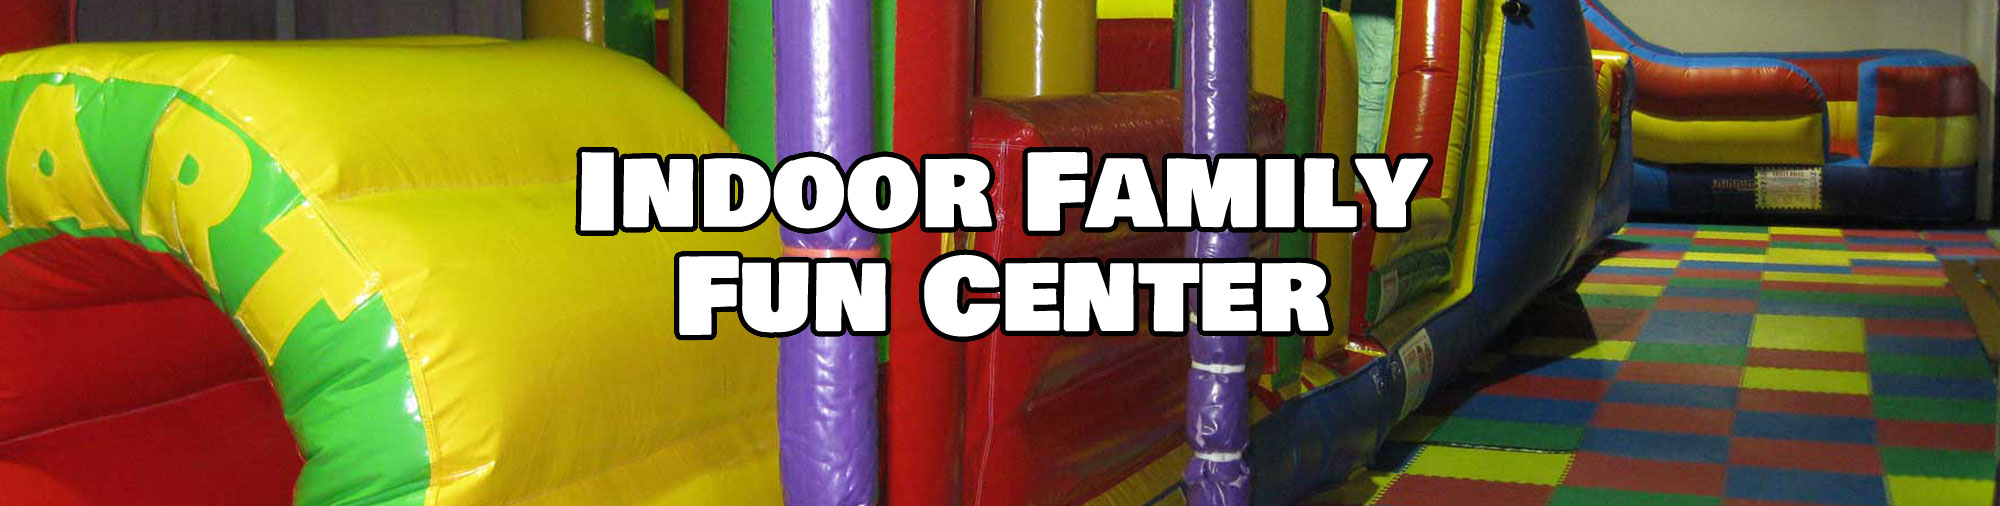 Family Entertainment Center